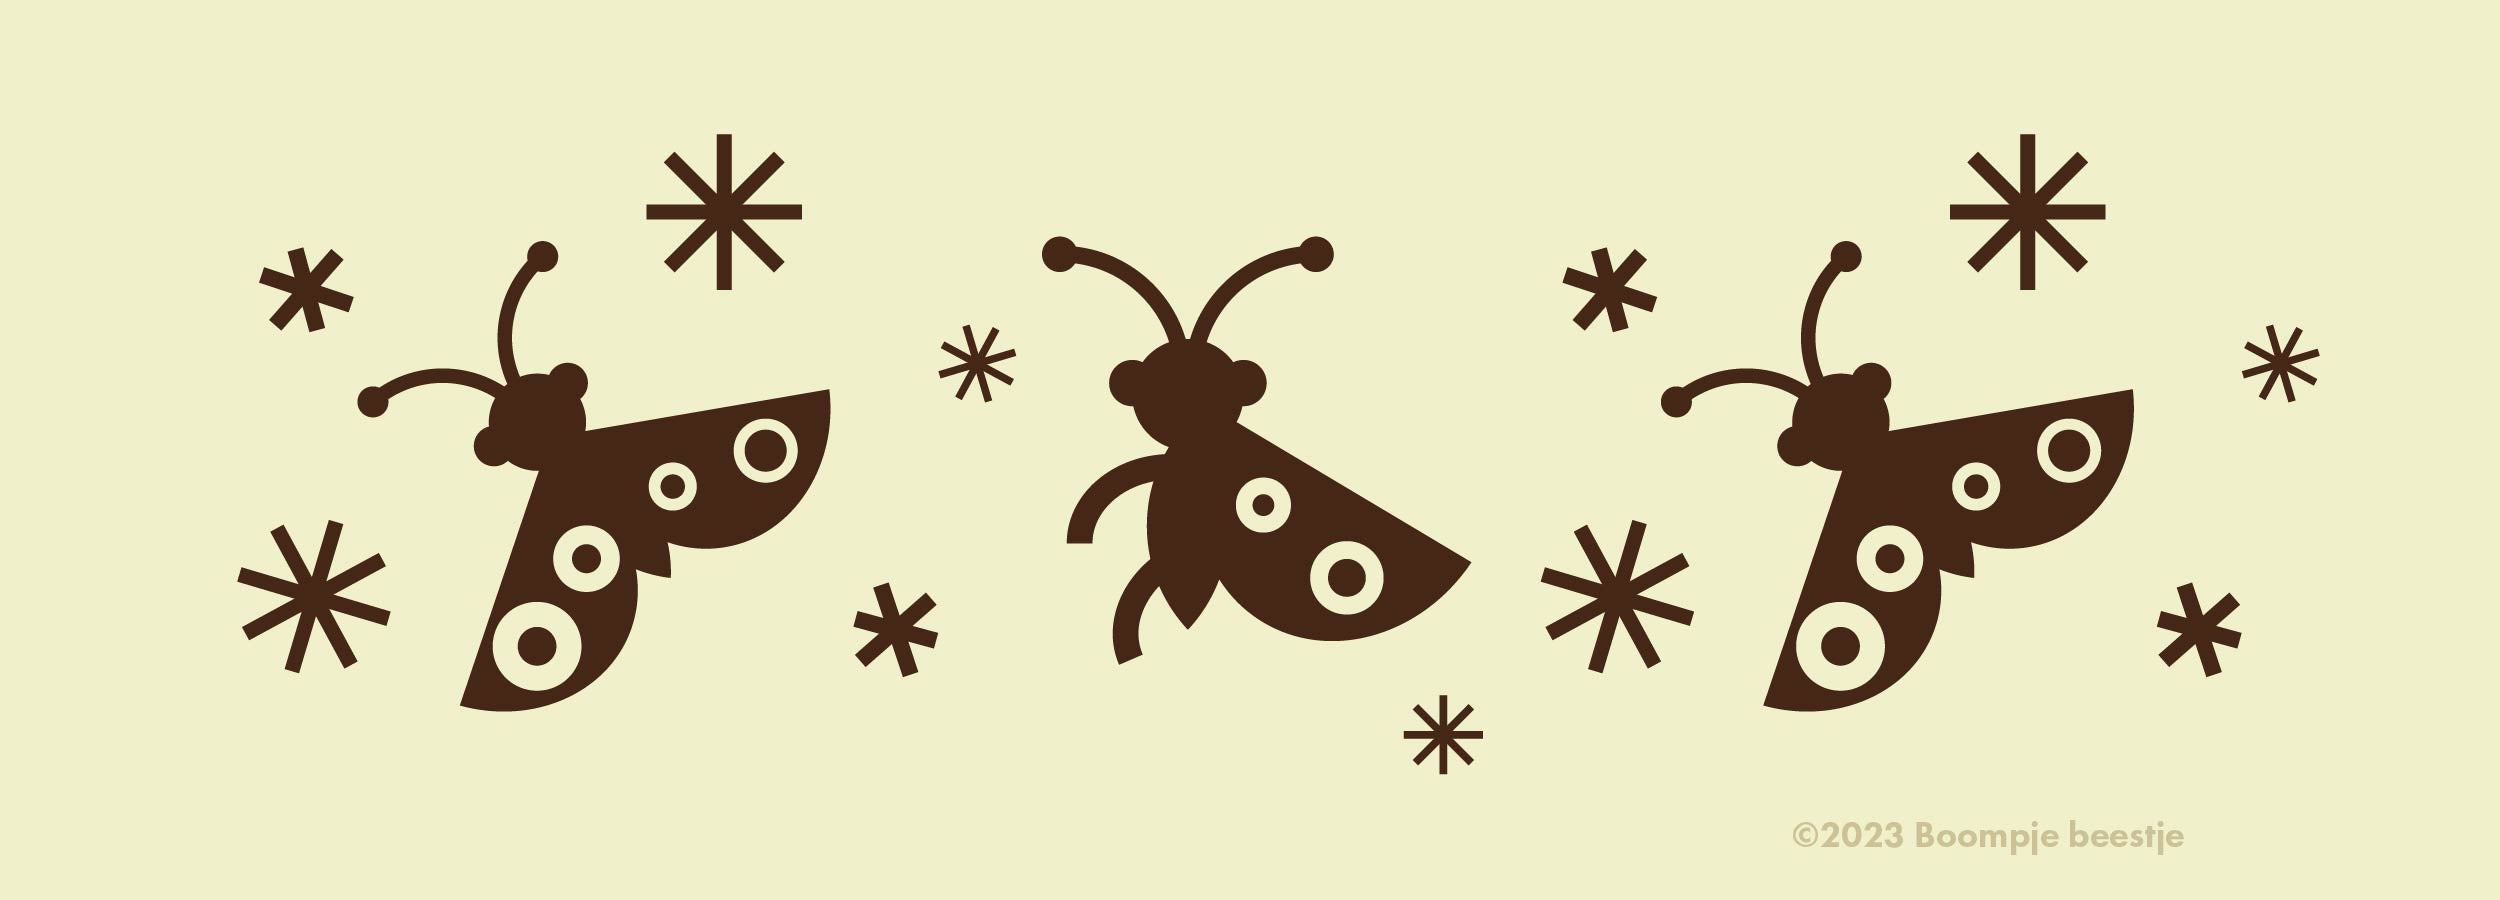 Moths kids illustration.